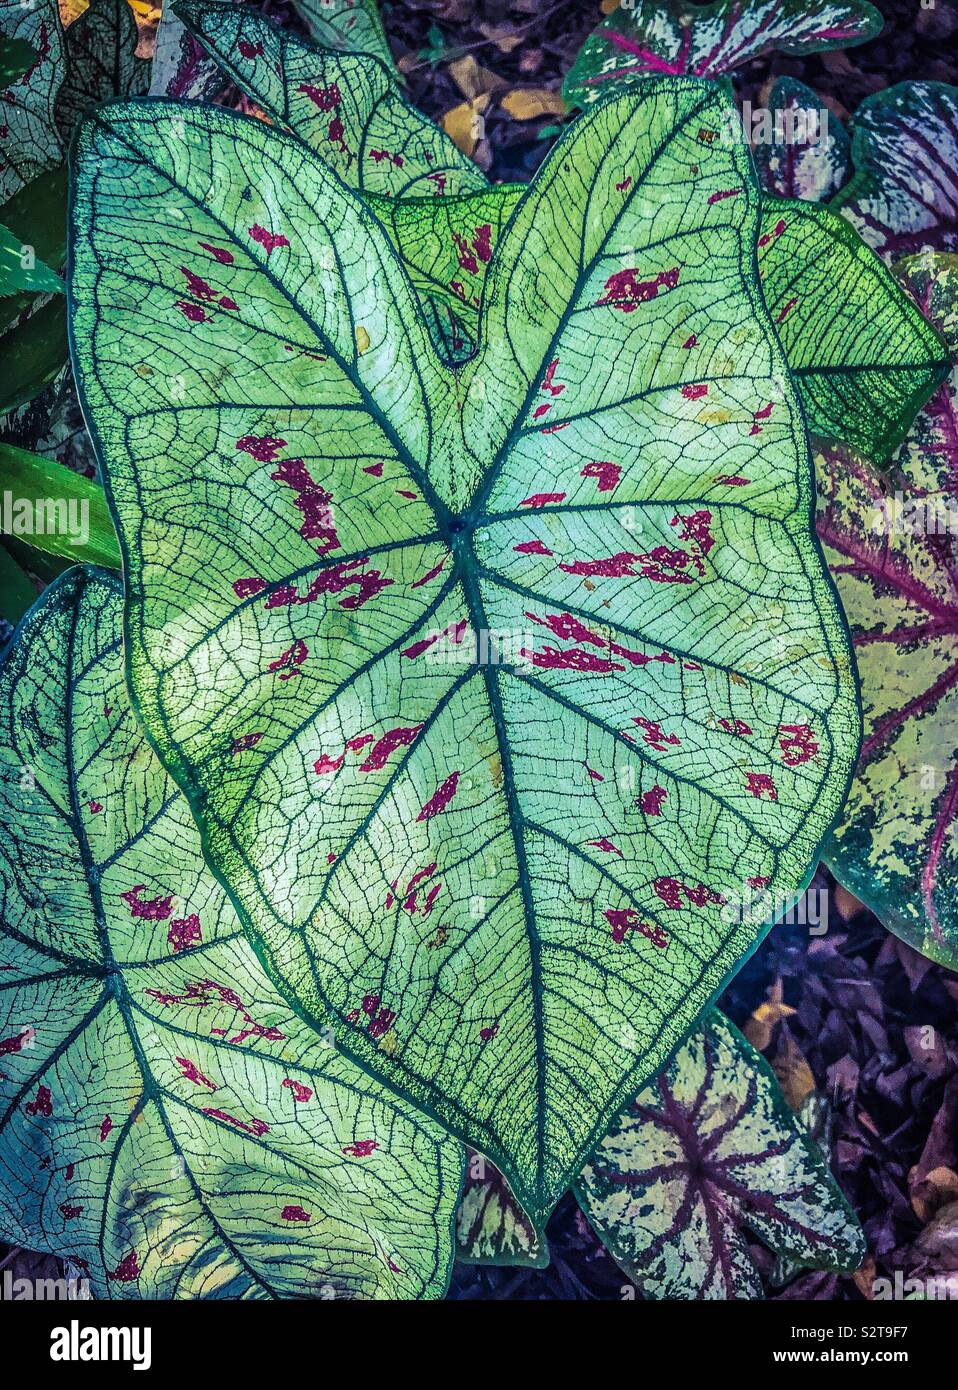 Colorful Caladium Leaf. West Palm Beach, Florida (July 21, 2019). Photo Credit: Ann M. Nicgorski. Stock Photo